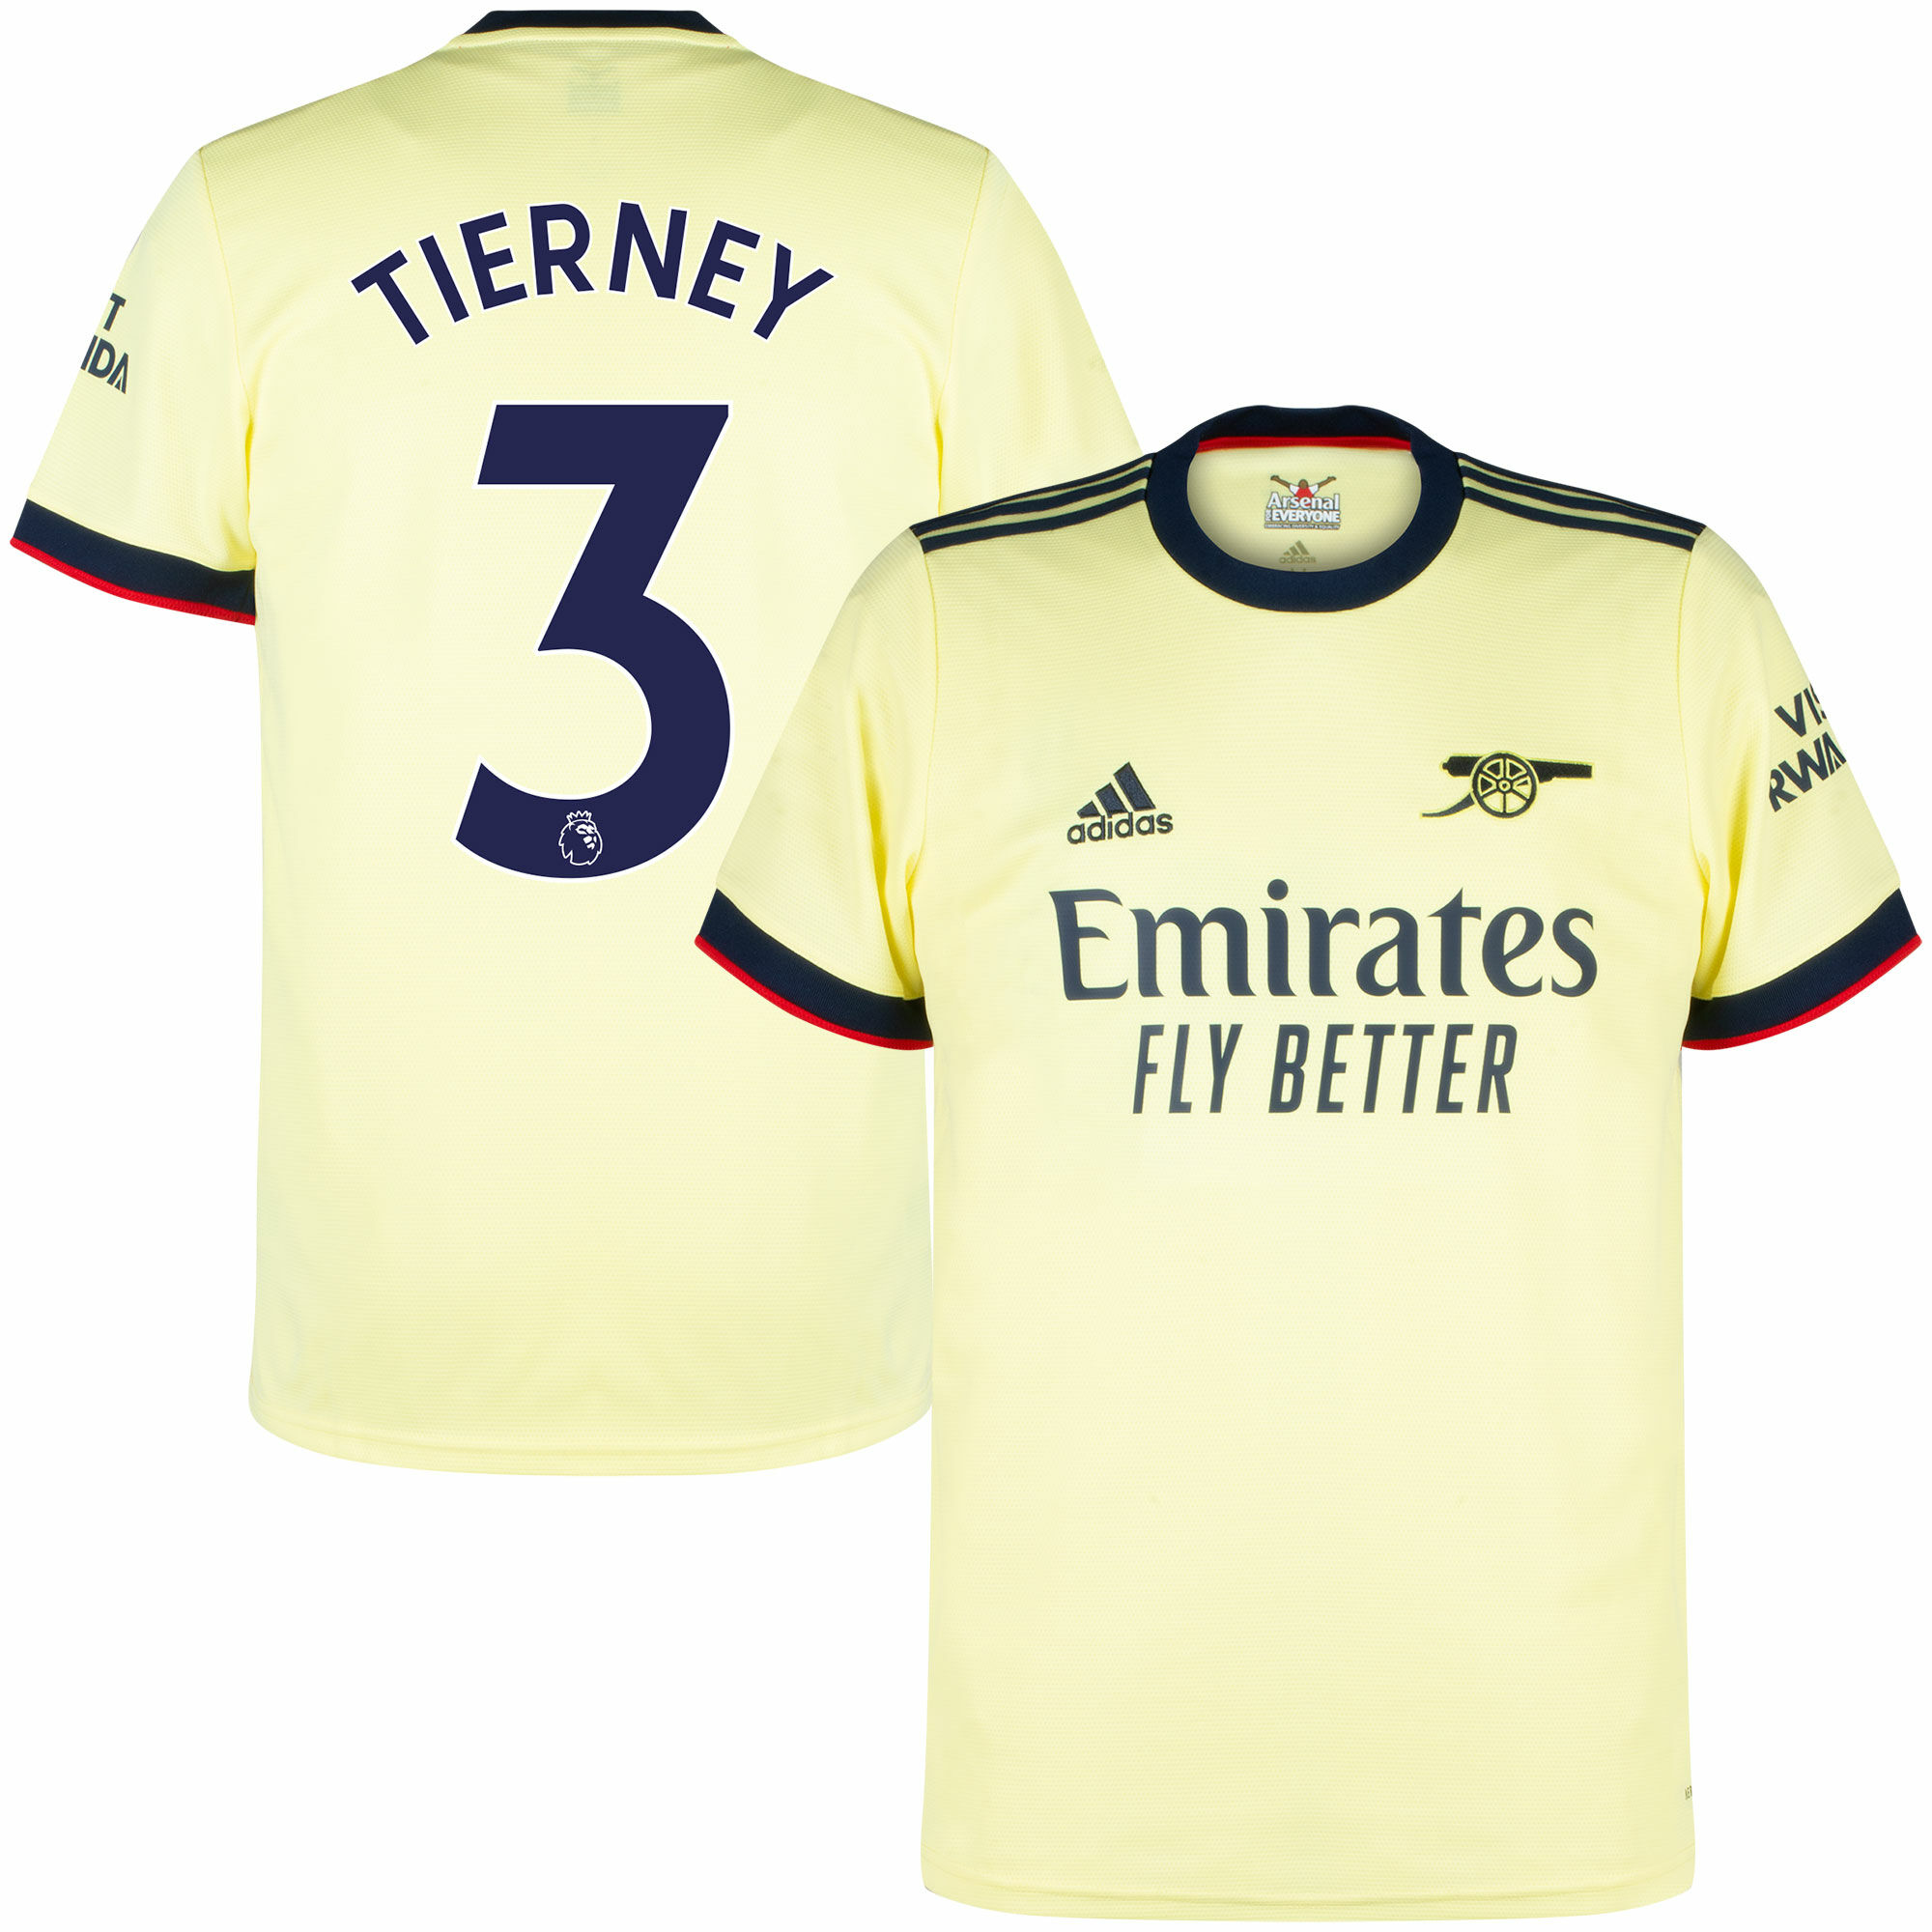 Arsenal - Dres fotbalový - sezóna 2021/22, žlutý, Kieran Tierney, číslo 3, venkovní